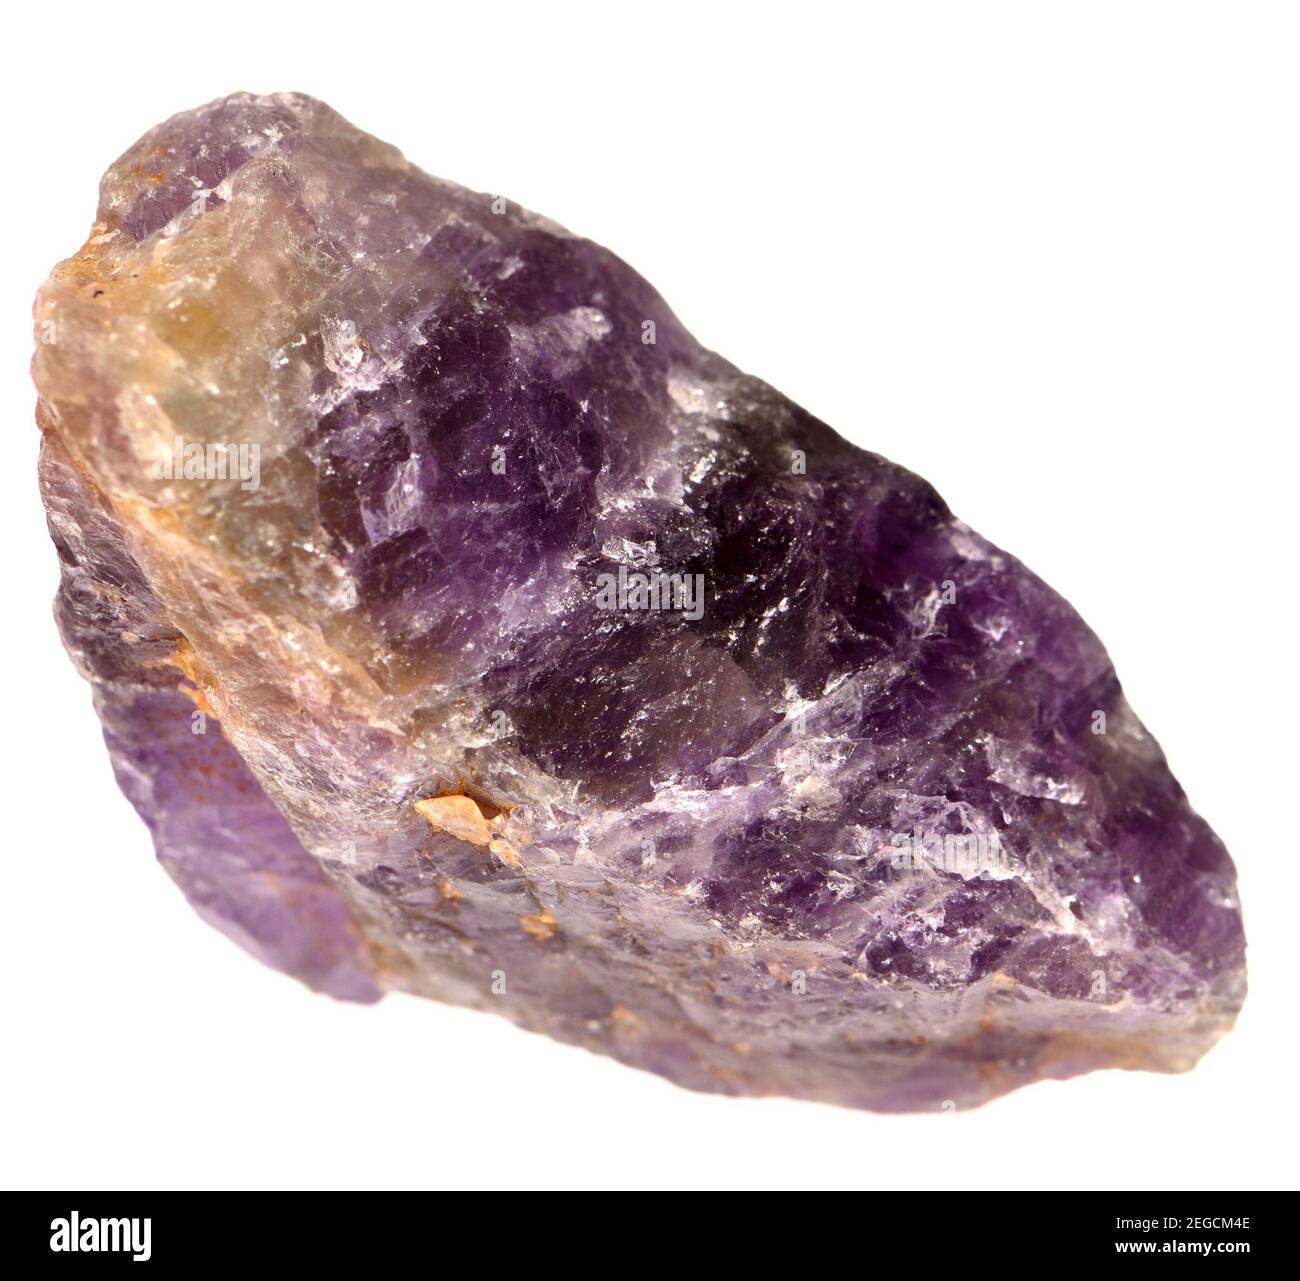 Amethyst crystals (purple quartz) Stock Photo